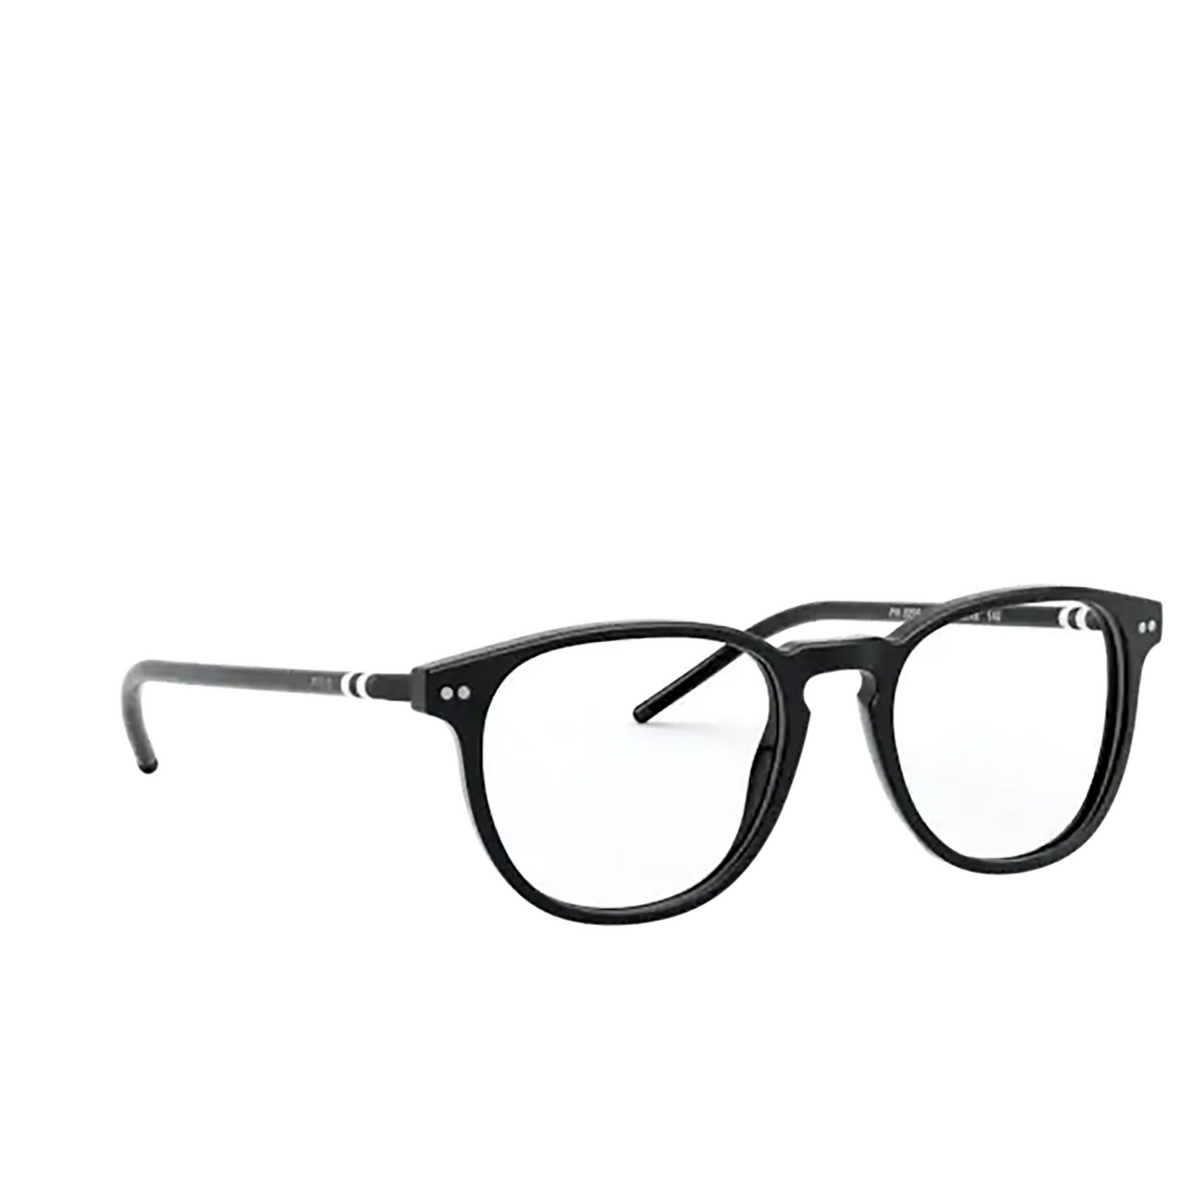 Polo Ralph Lauren® Square Eyeglasses: PH2225 color Shiny Black 5001 - three-quarters view.